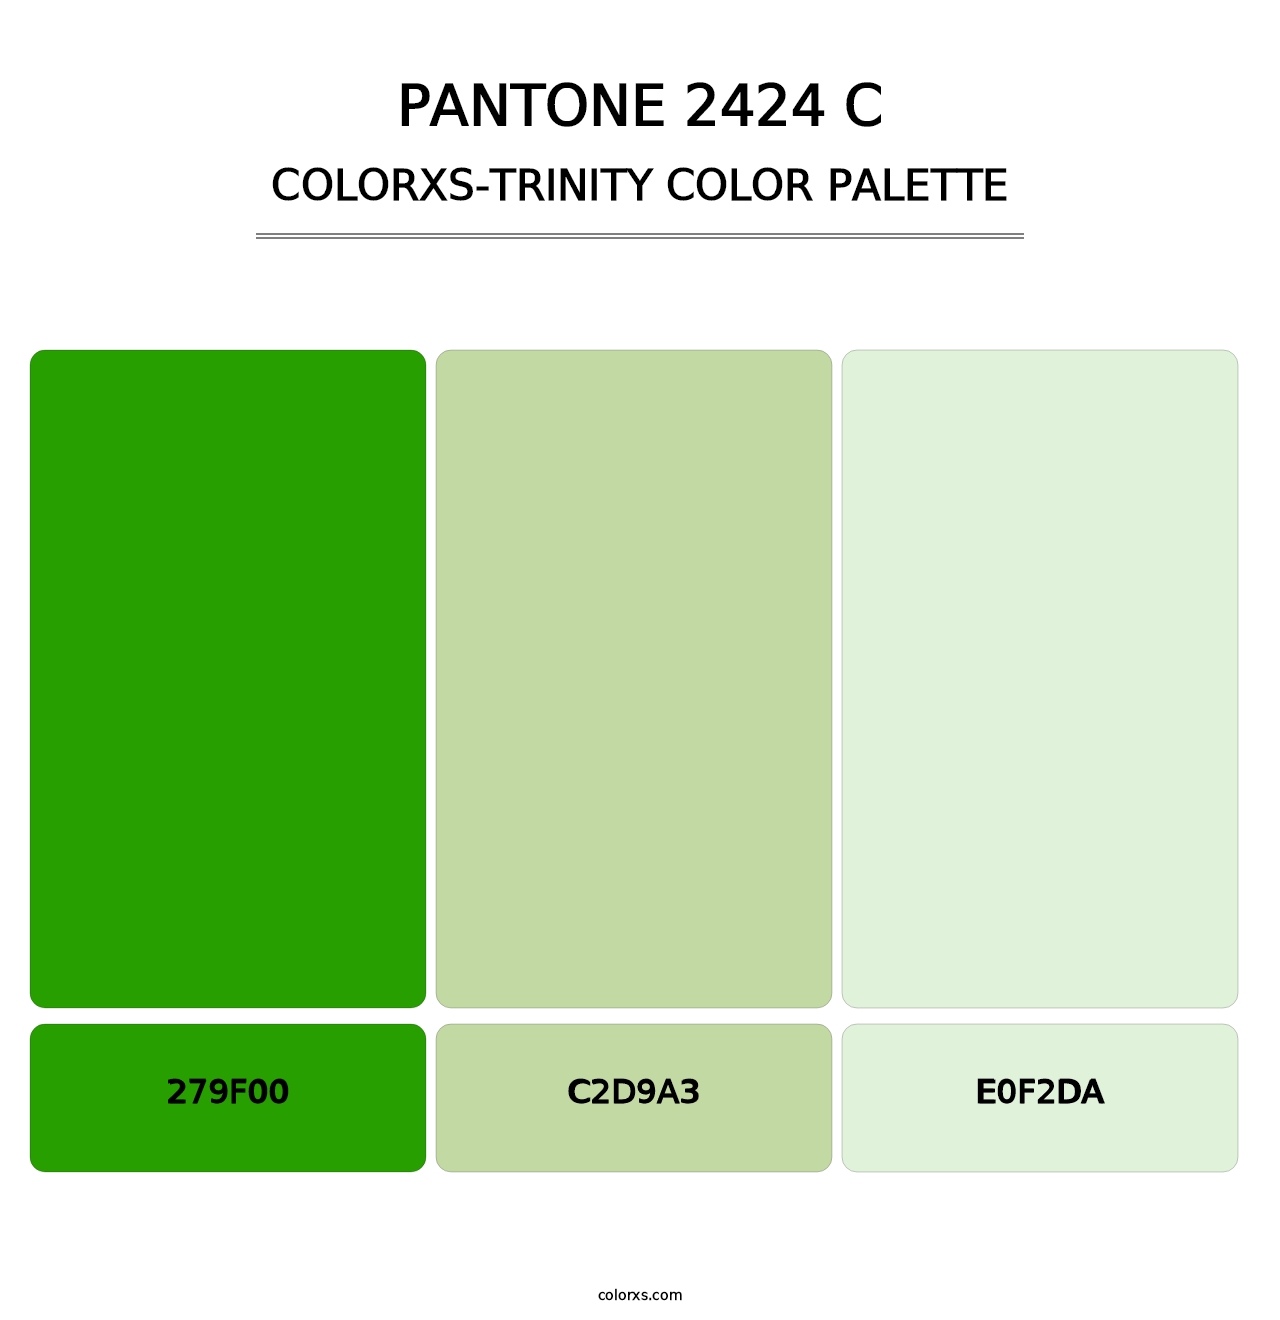 PANTONE 2424 C - Colorxs Trinity Palette